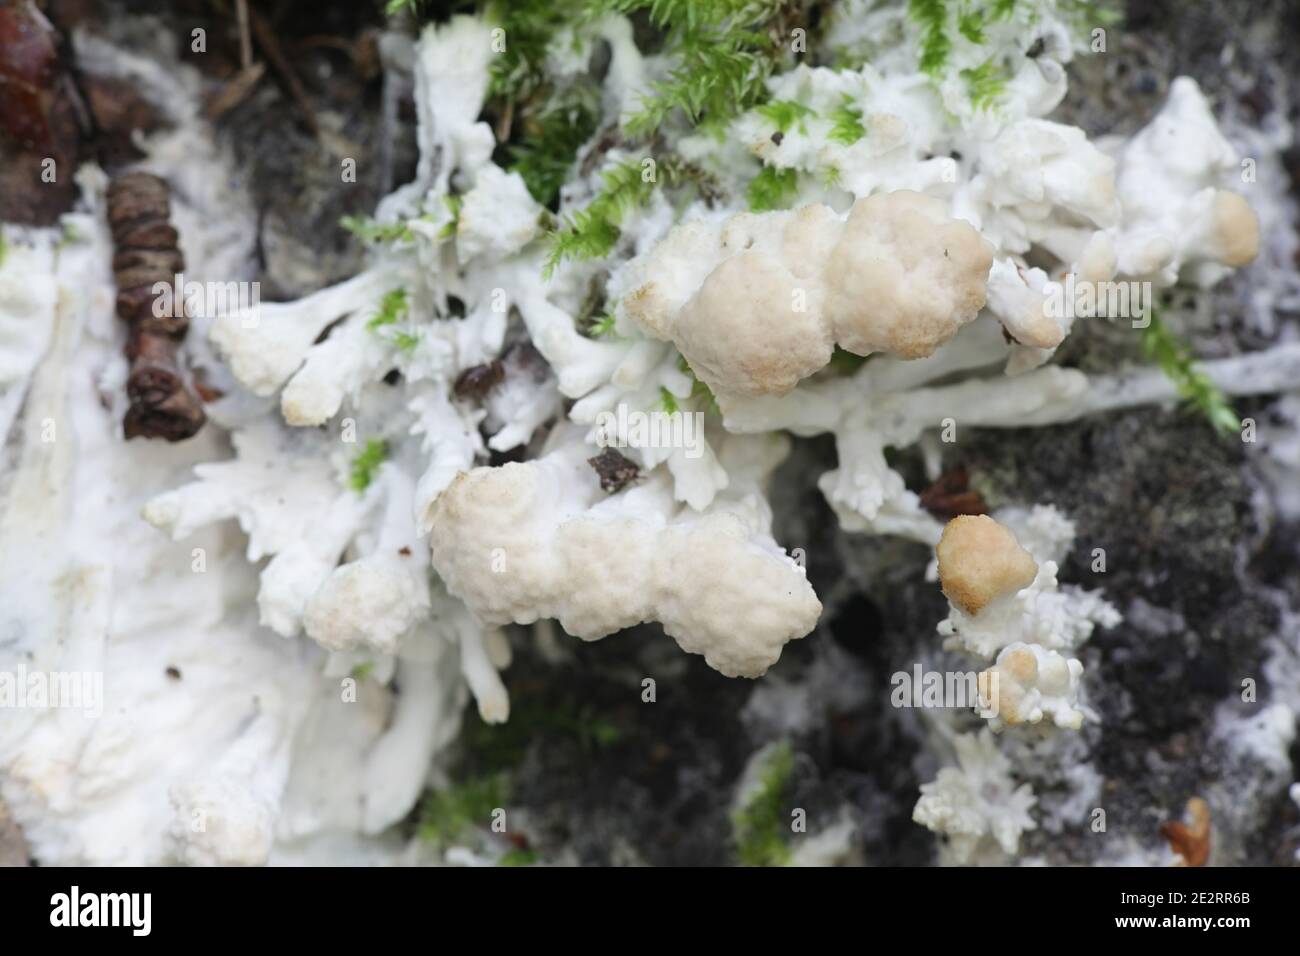 Sebacina incrustans, known as enveloping crust, wild fungus from Finland Stock Photo